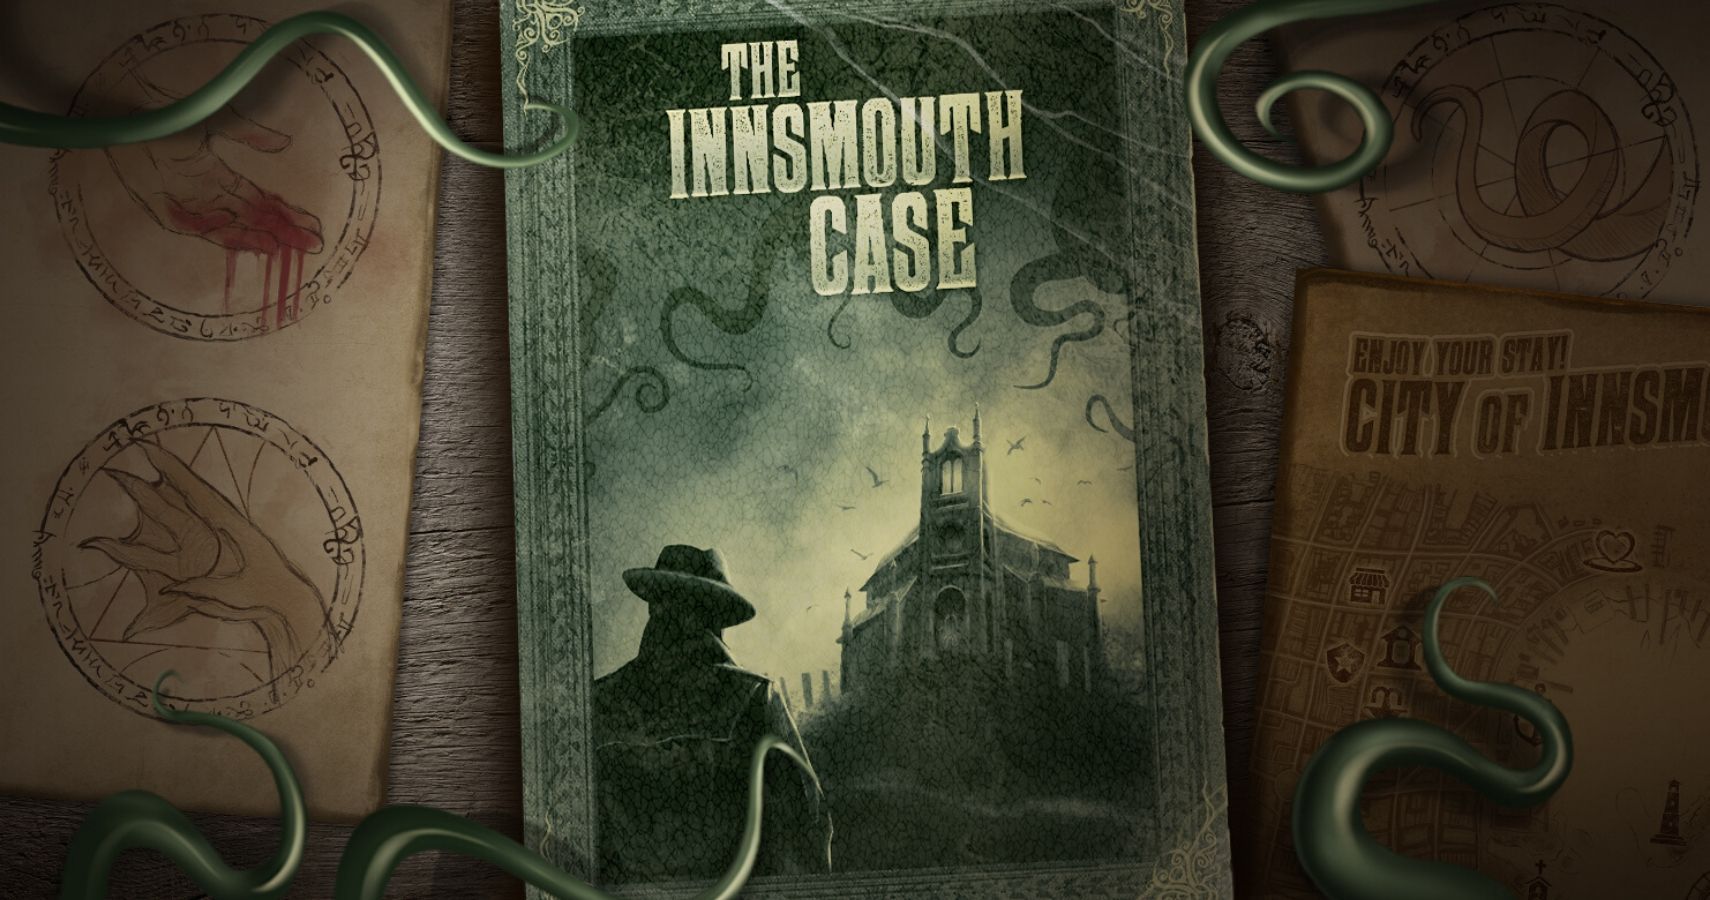 Solve An Eldritch Mystery In Lovecraftian Visual Horror Novel The Innsmouth Case